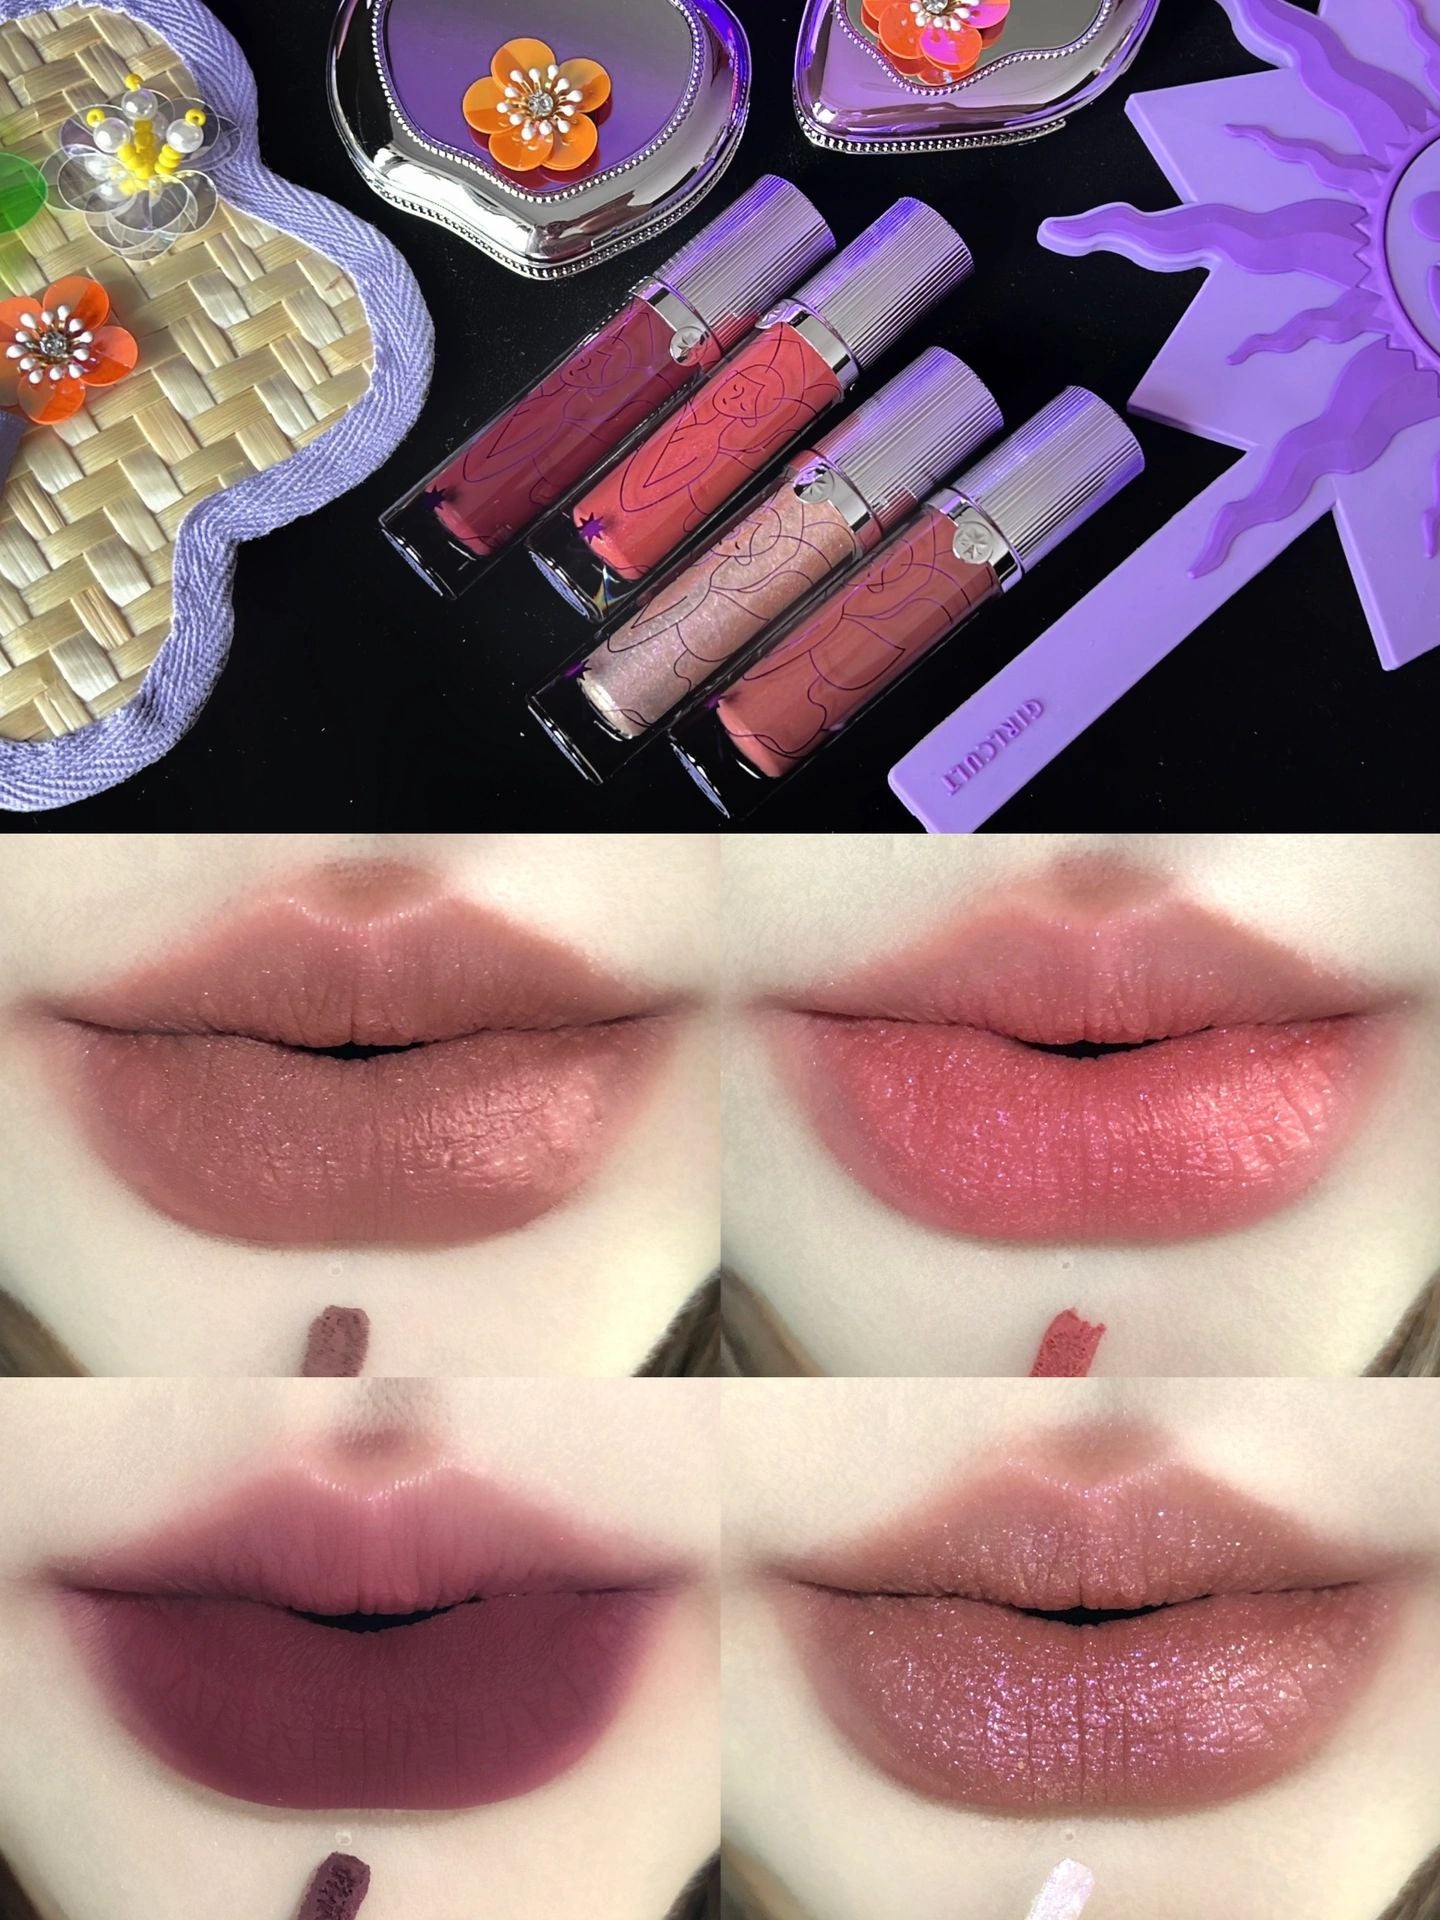 Girlcult Garden Dream Series Matte Lip Cream 3.8g 构奇游园惊梦唇霜系列唇霜